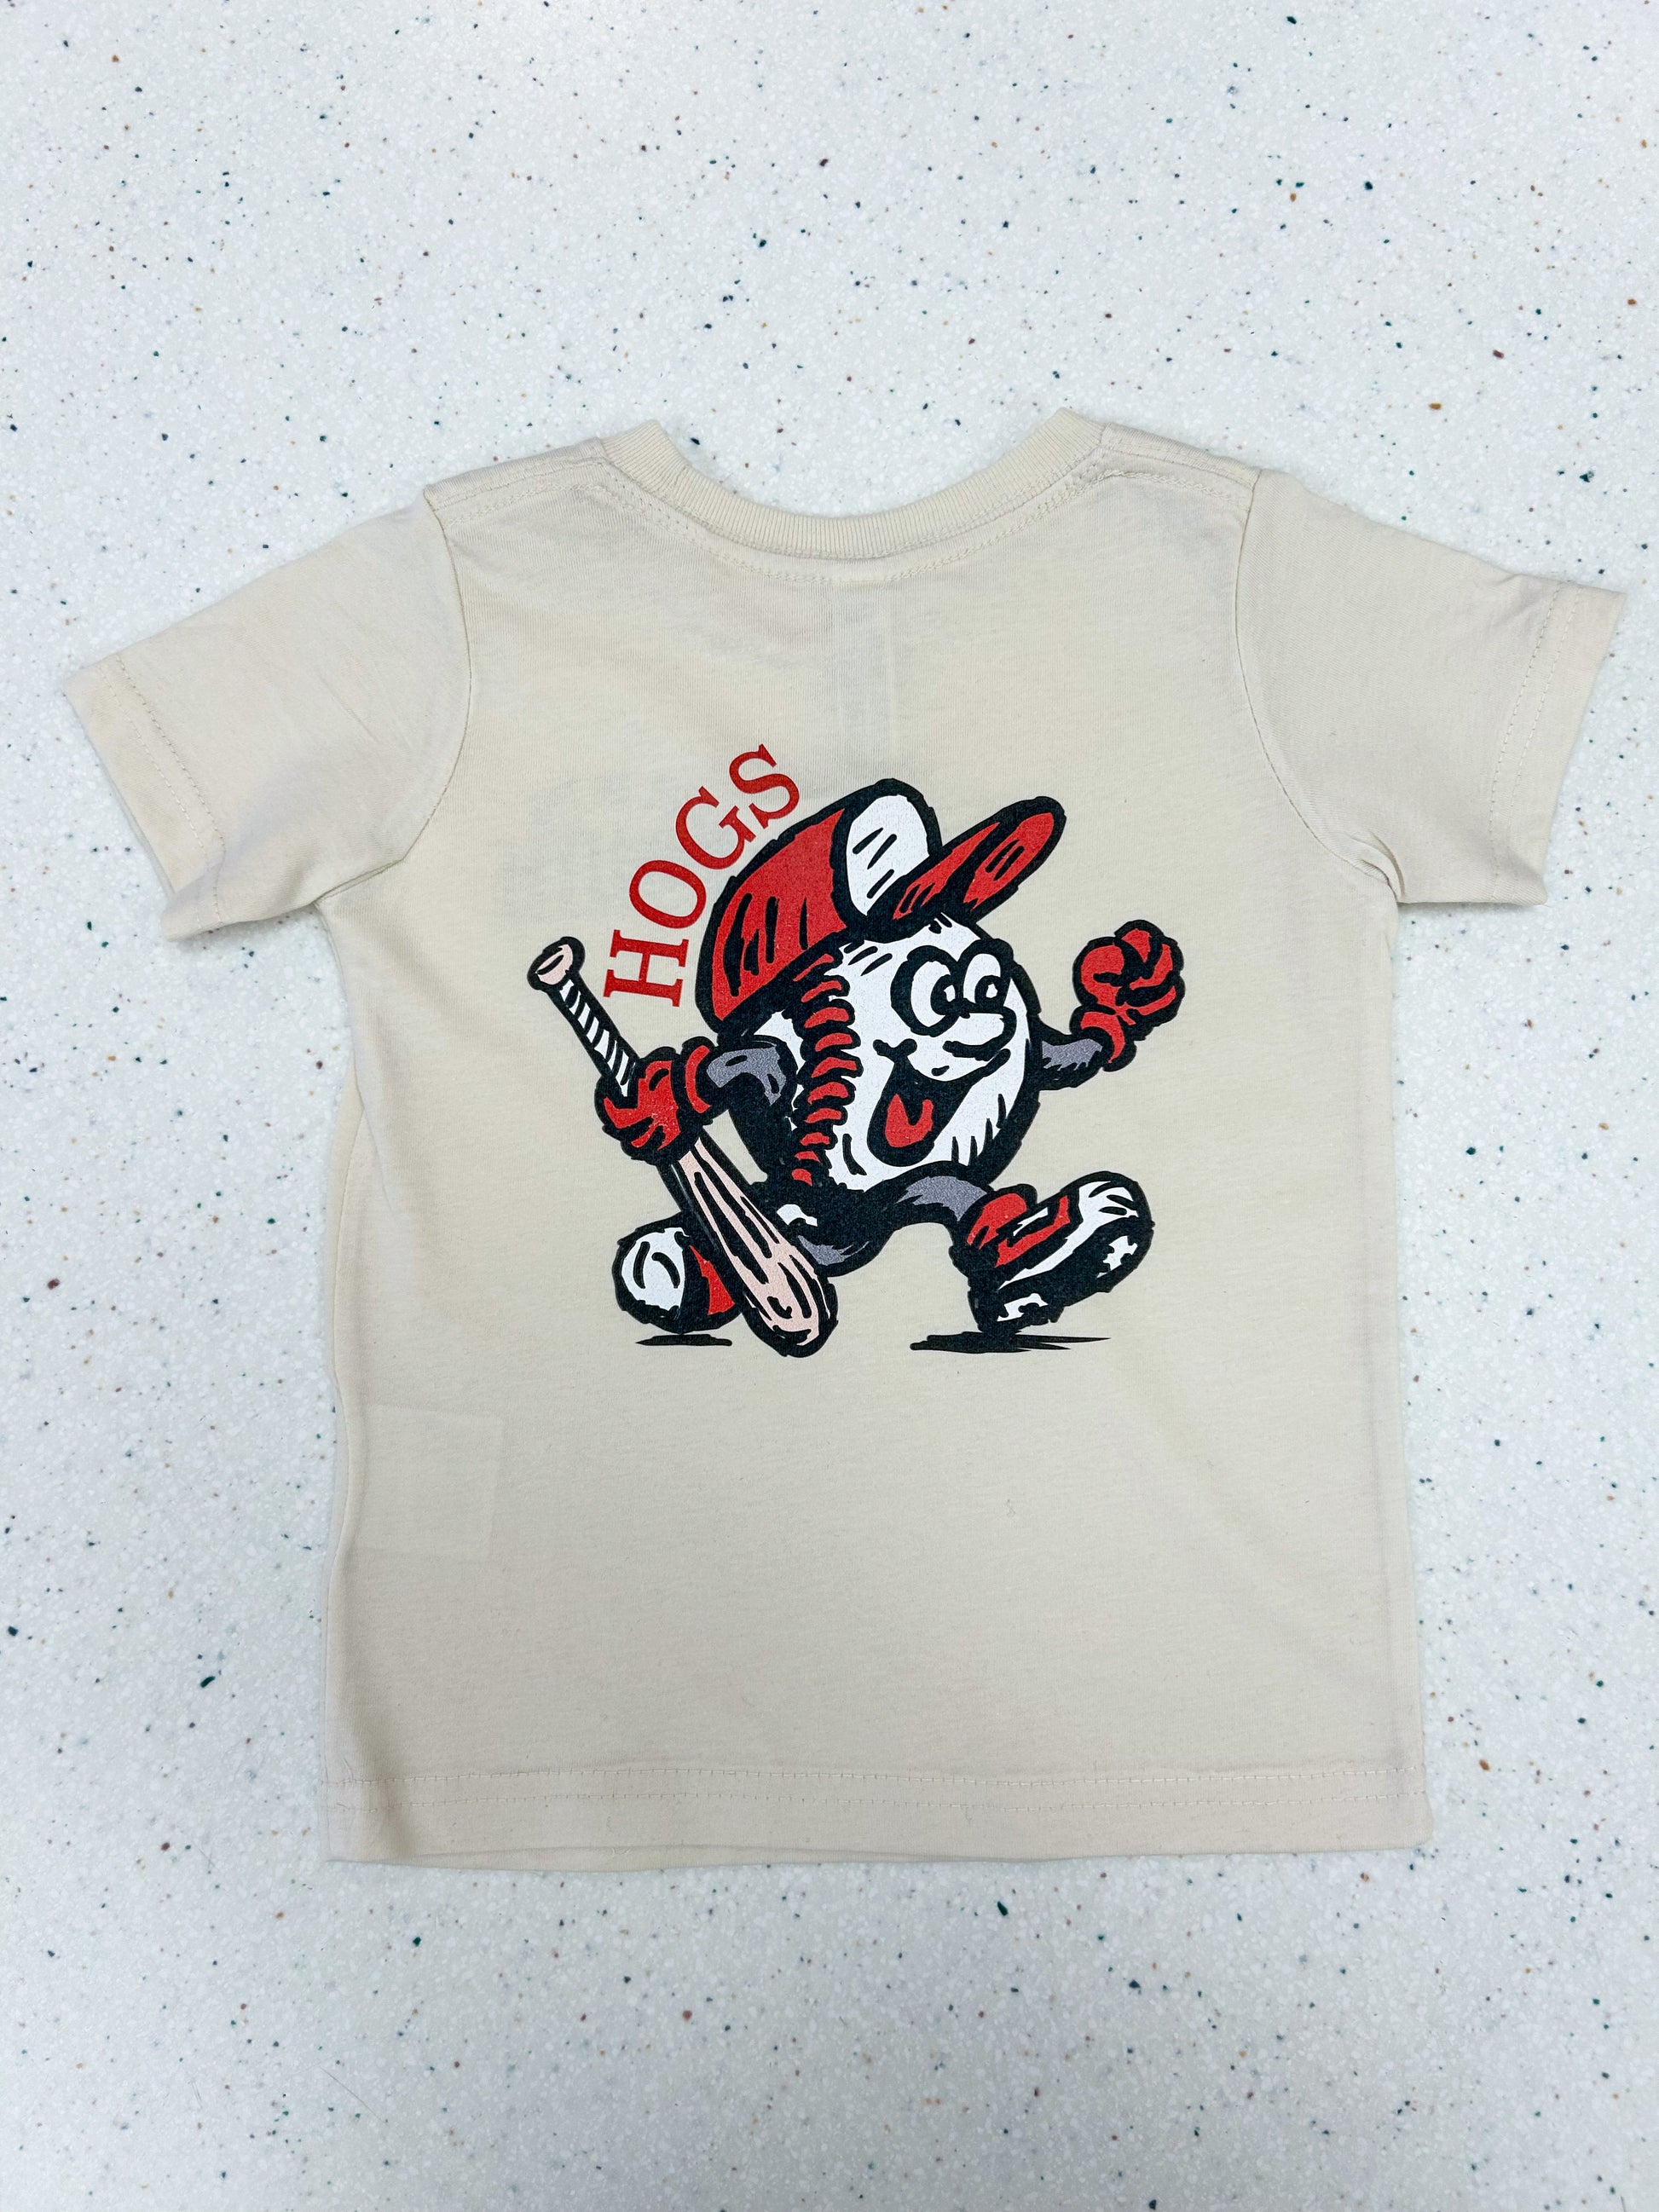 Hogs Baseball Shirt  - Doodlebug's Children's Boutique